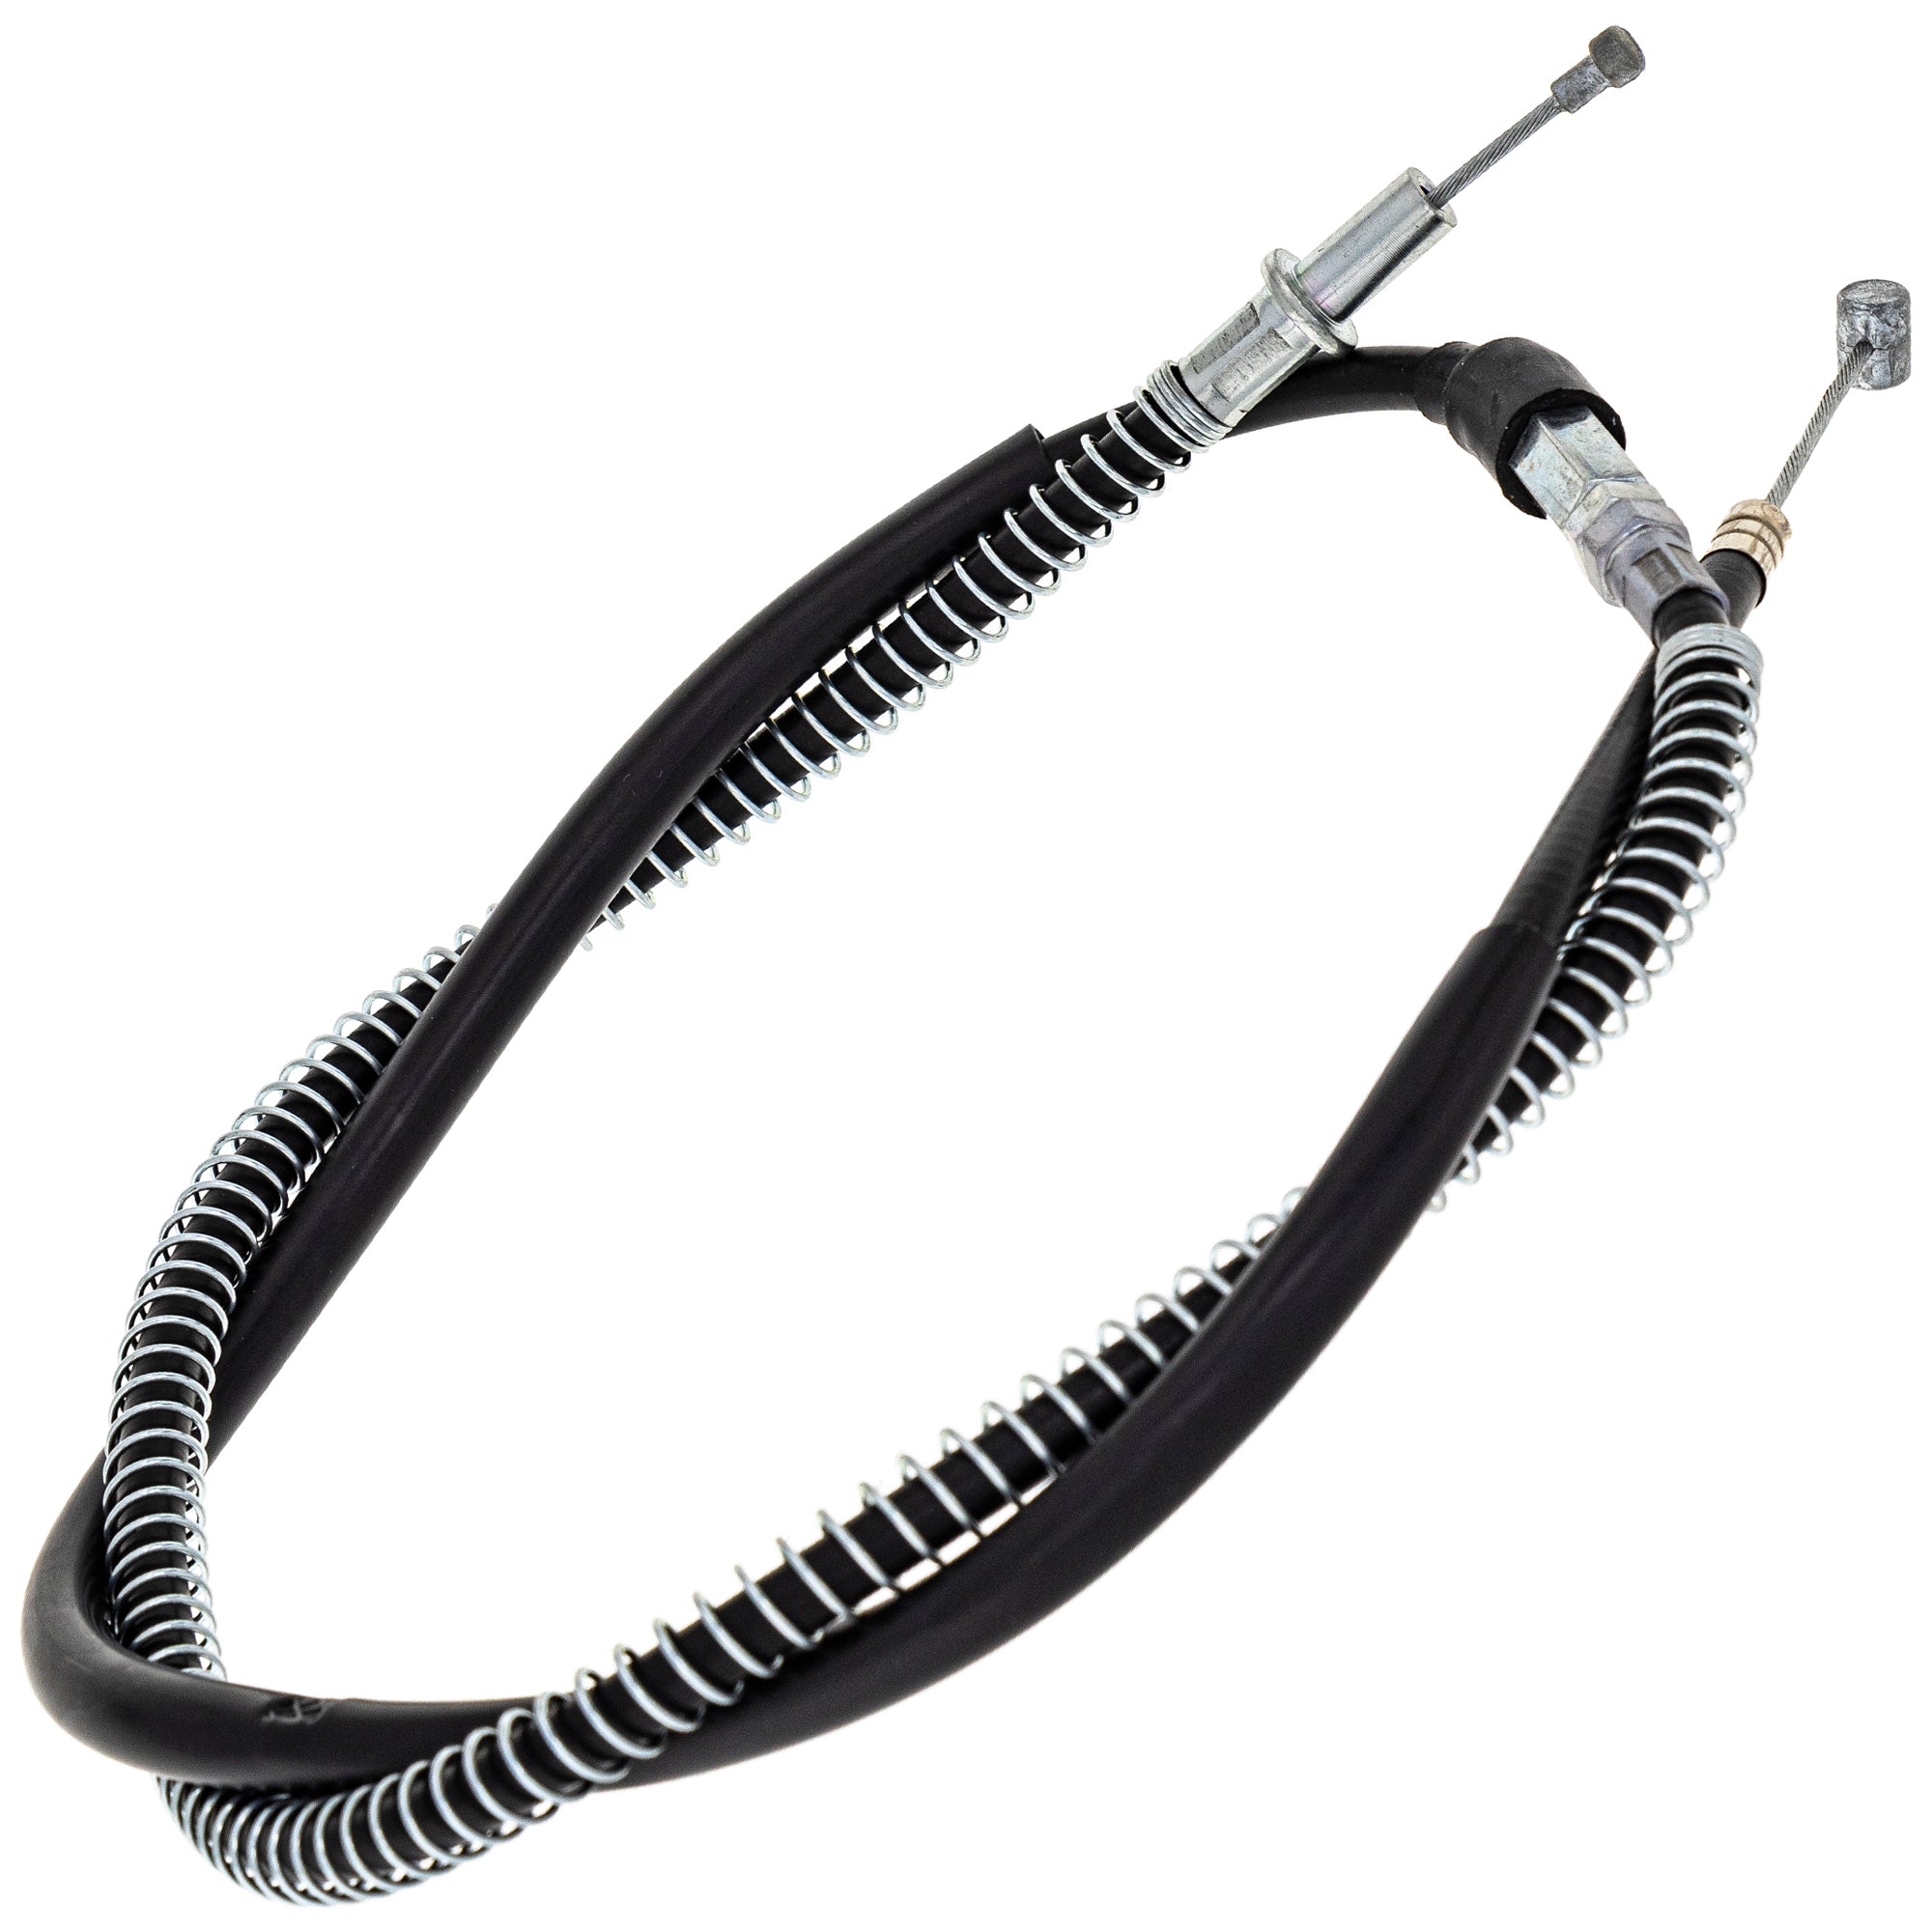 Clutch Cable for Kawasaki GPz550 KZ550H 54011-1096